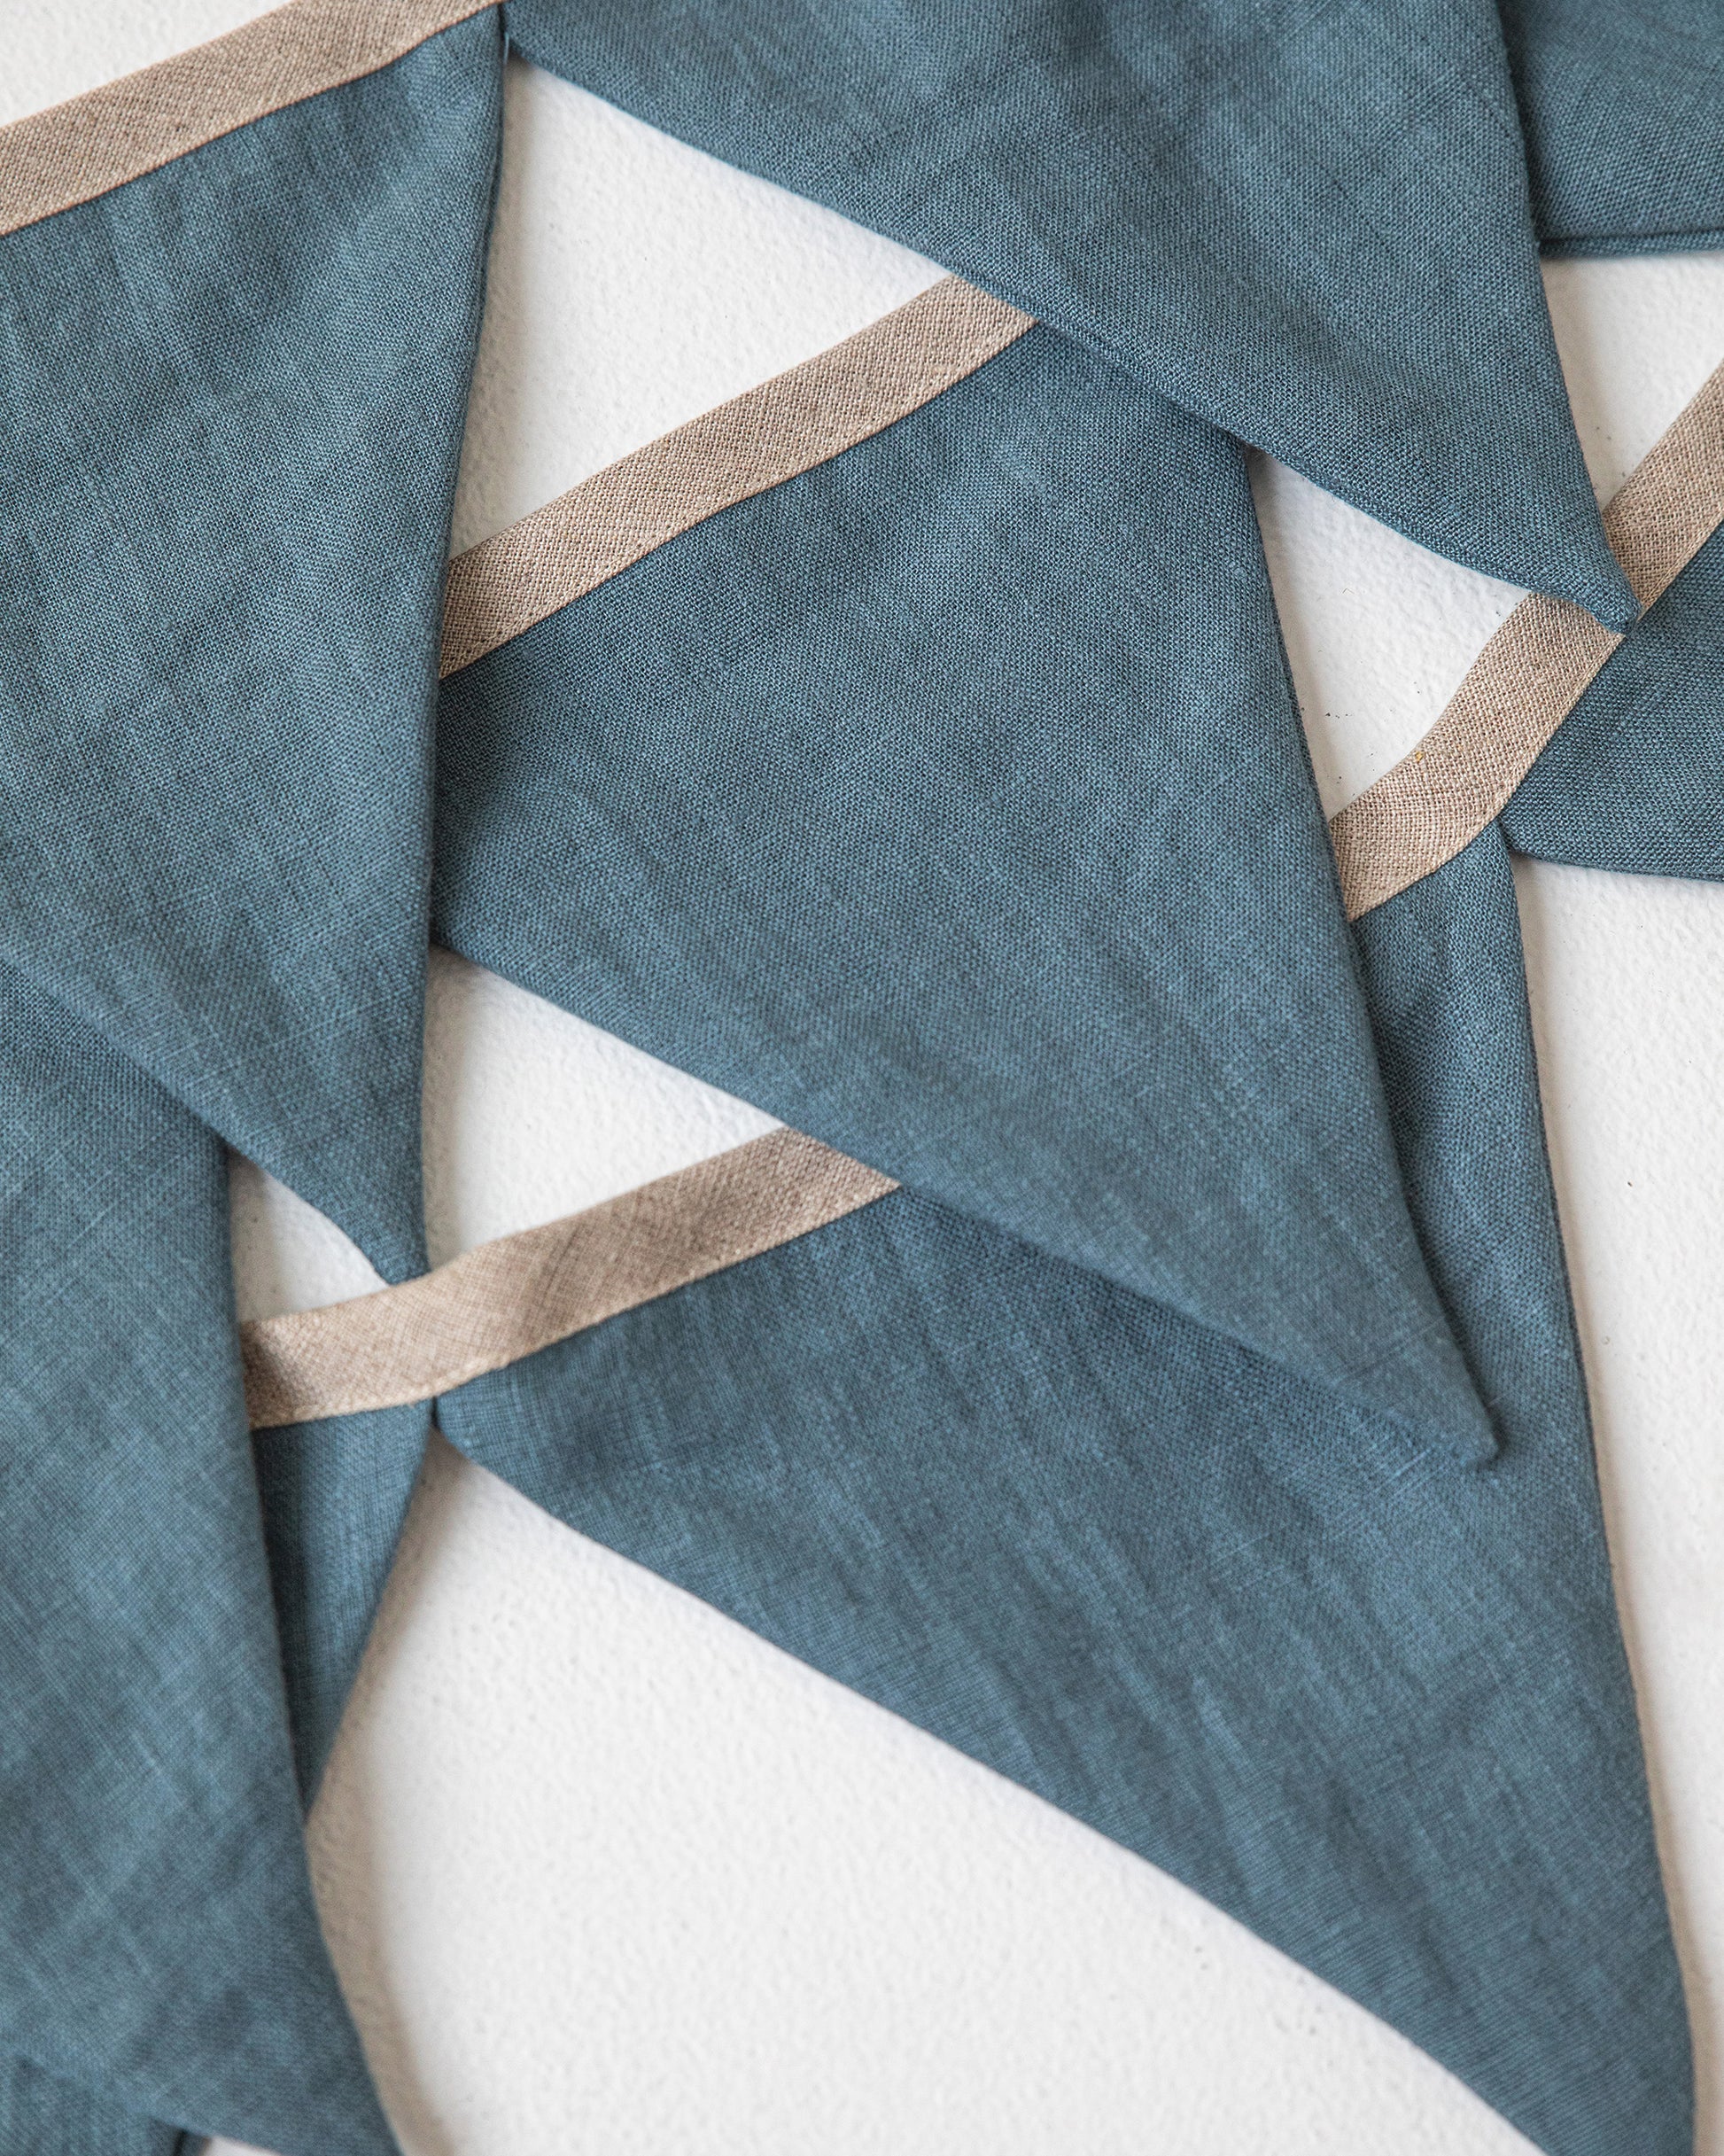 Linen bunting in Gray Blue - MagicLinen